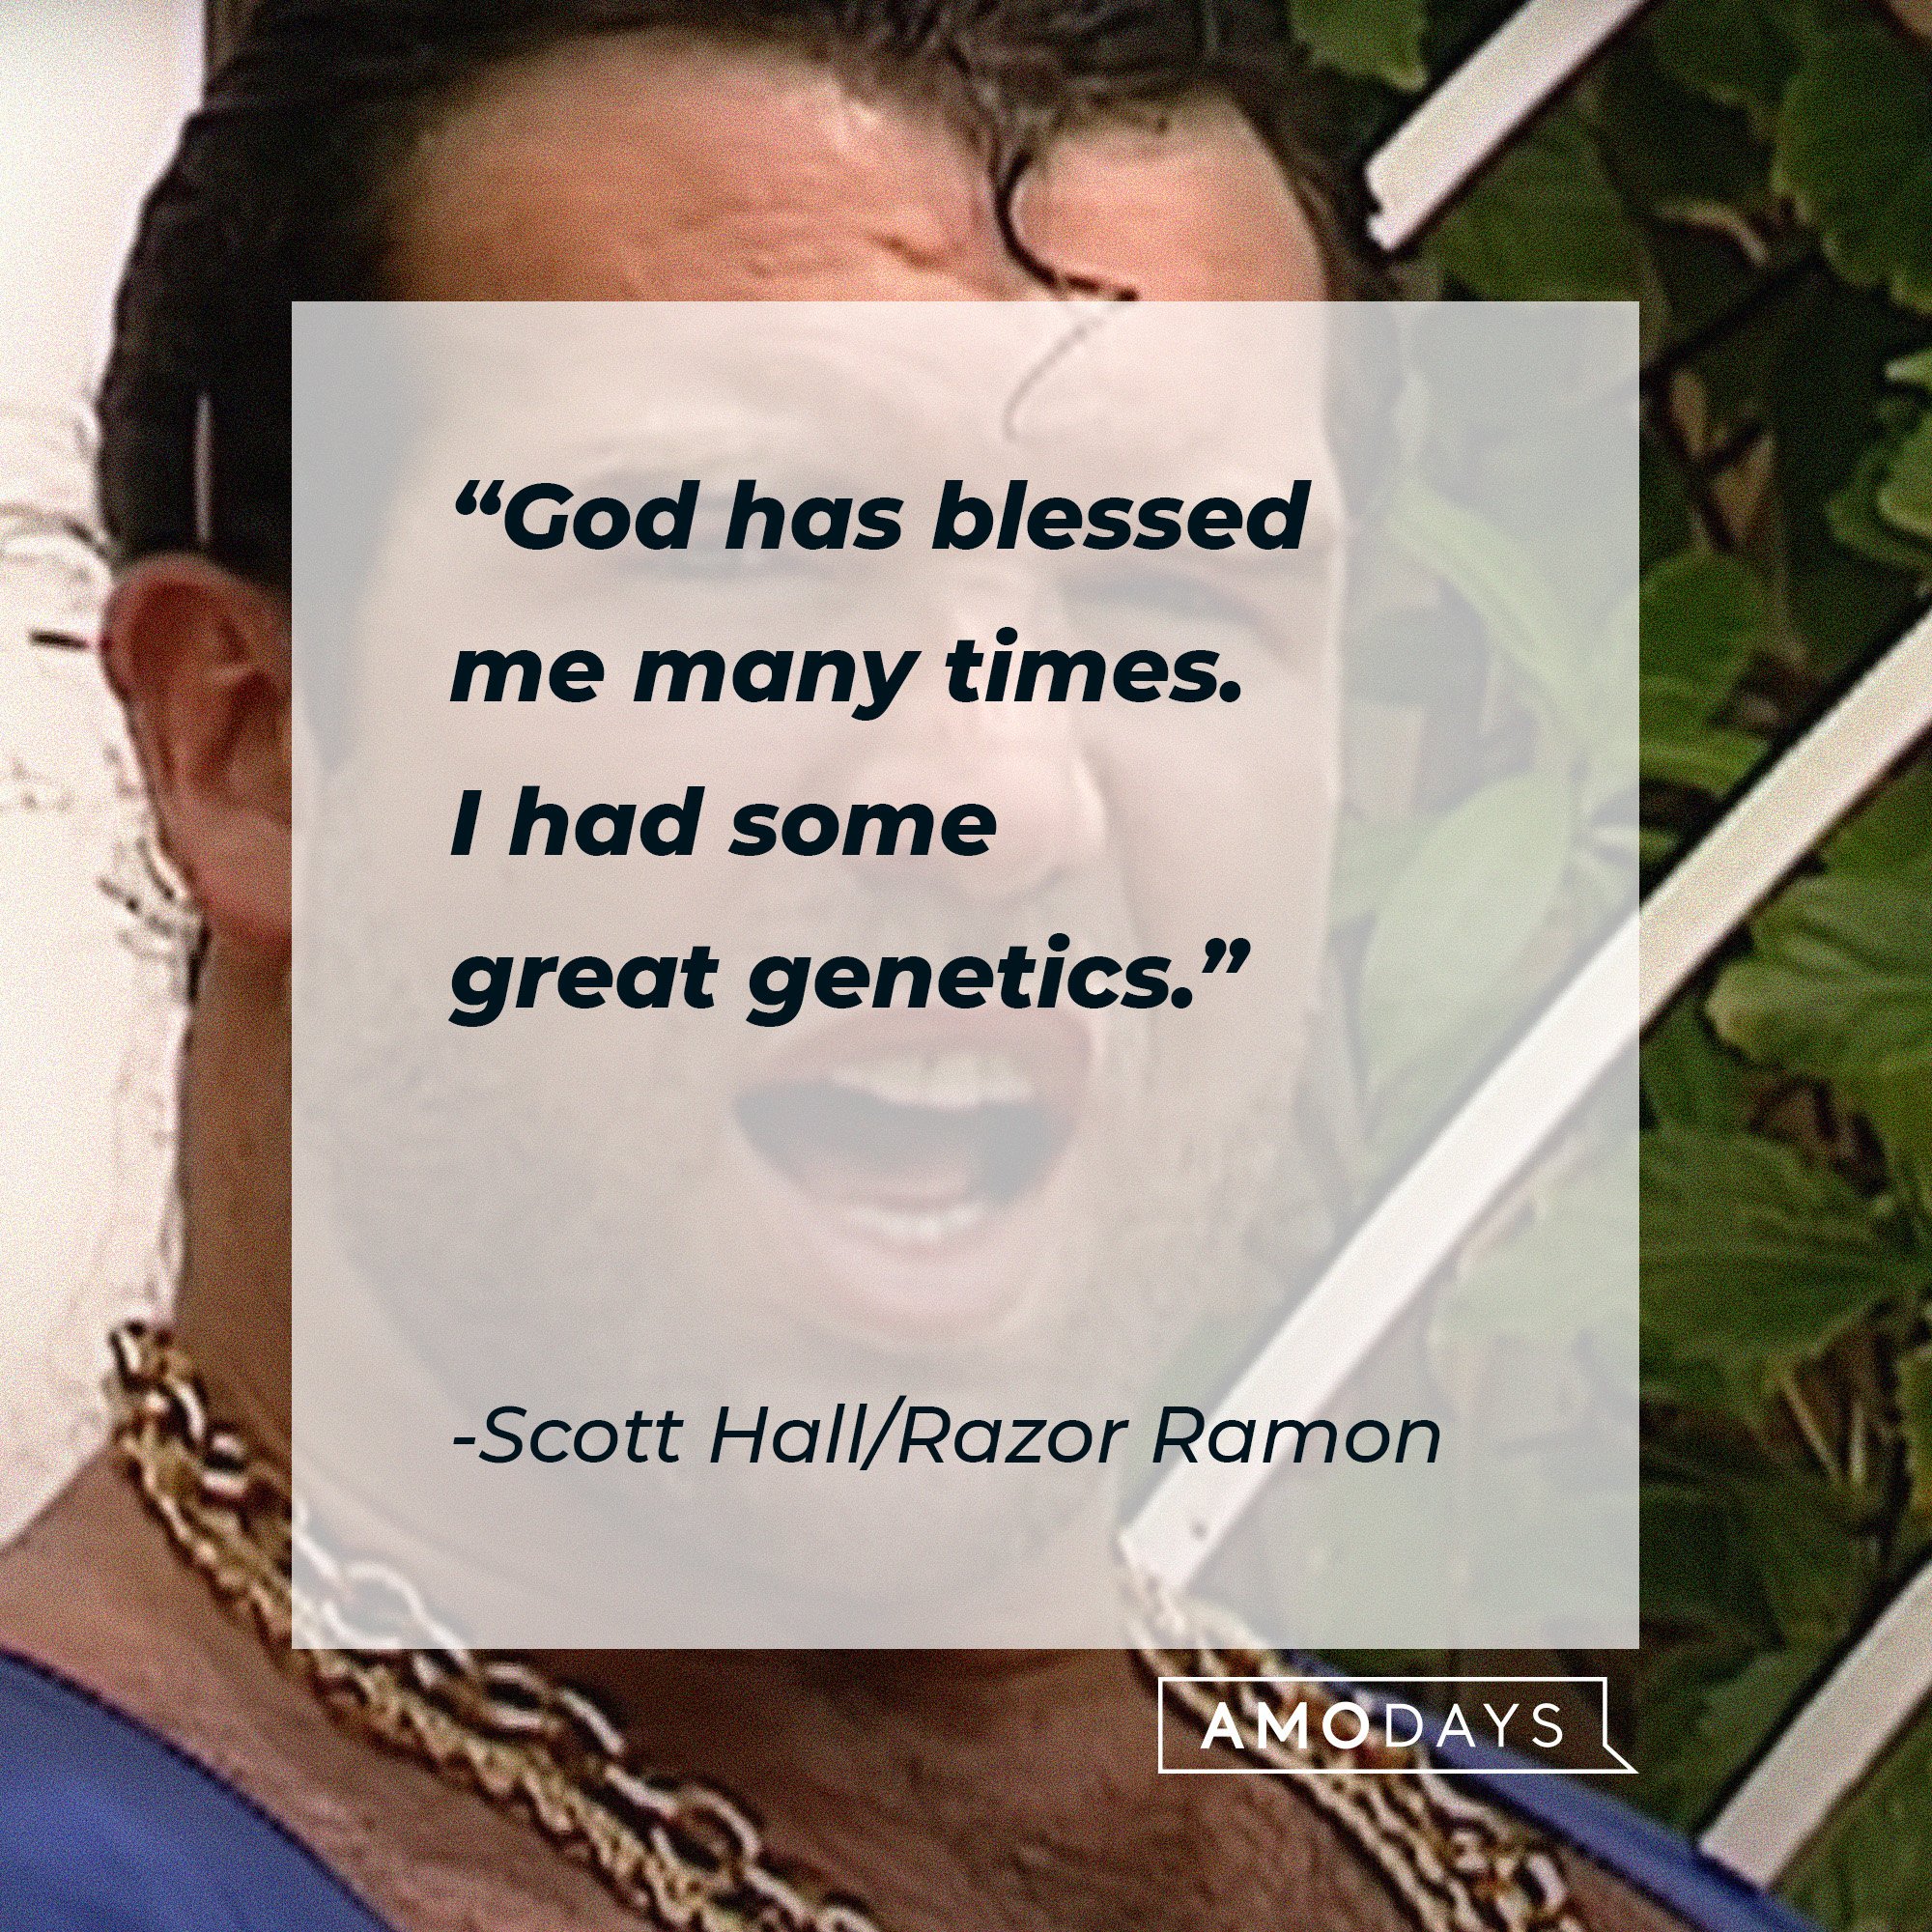 Scott Hall/Razor Ramon’s quote: "God has blessed me many times. I had some great genetics." | Image: AmoDays